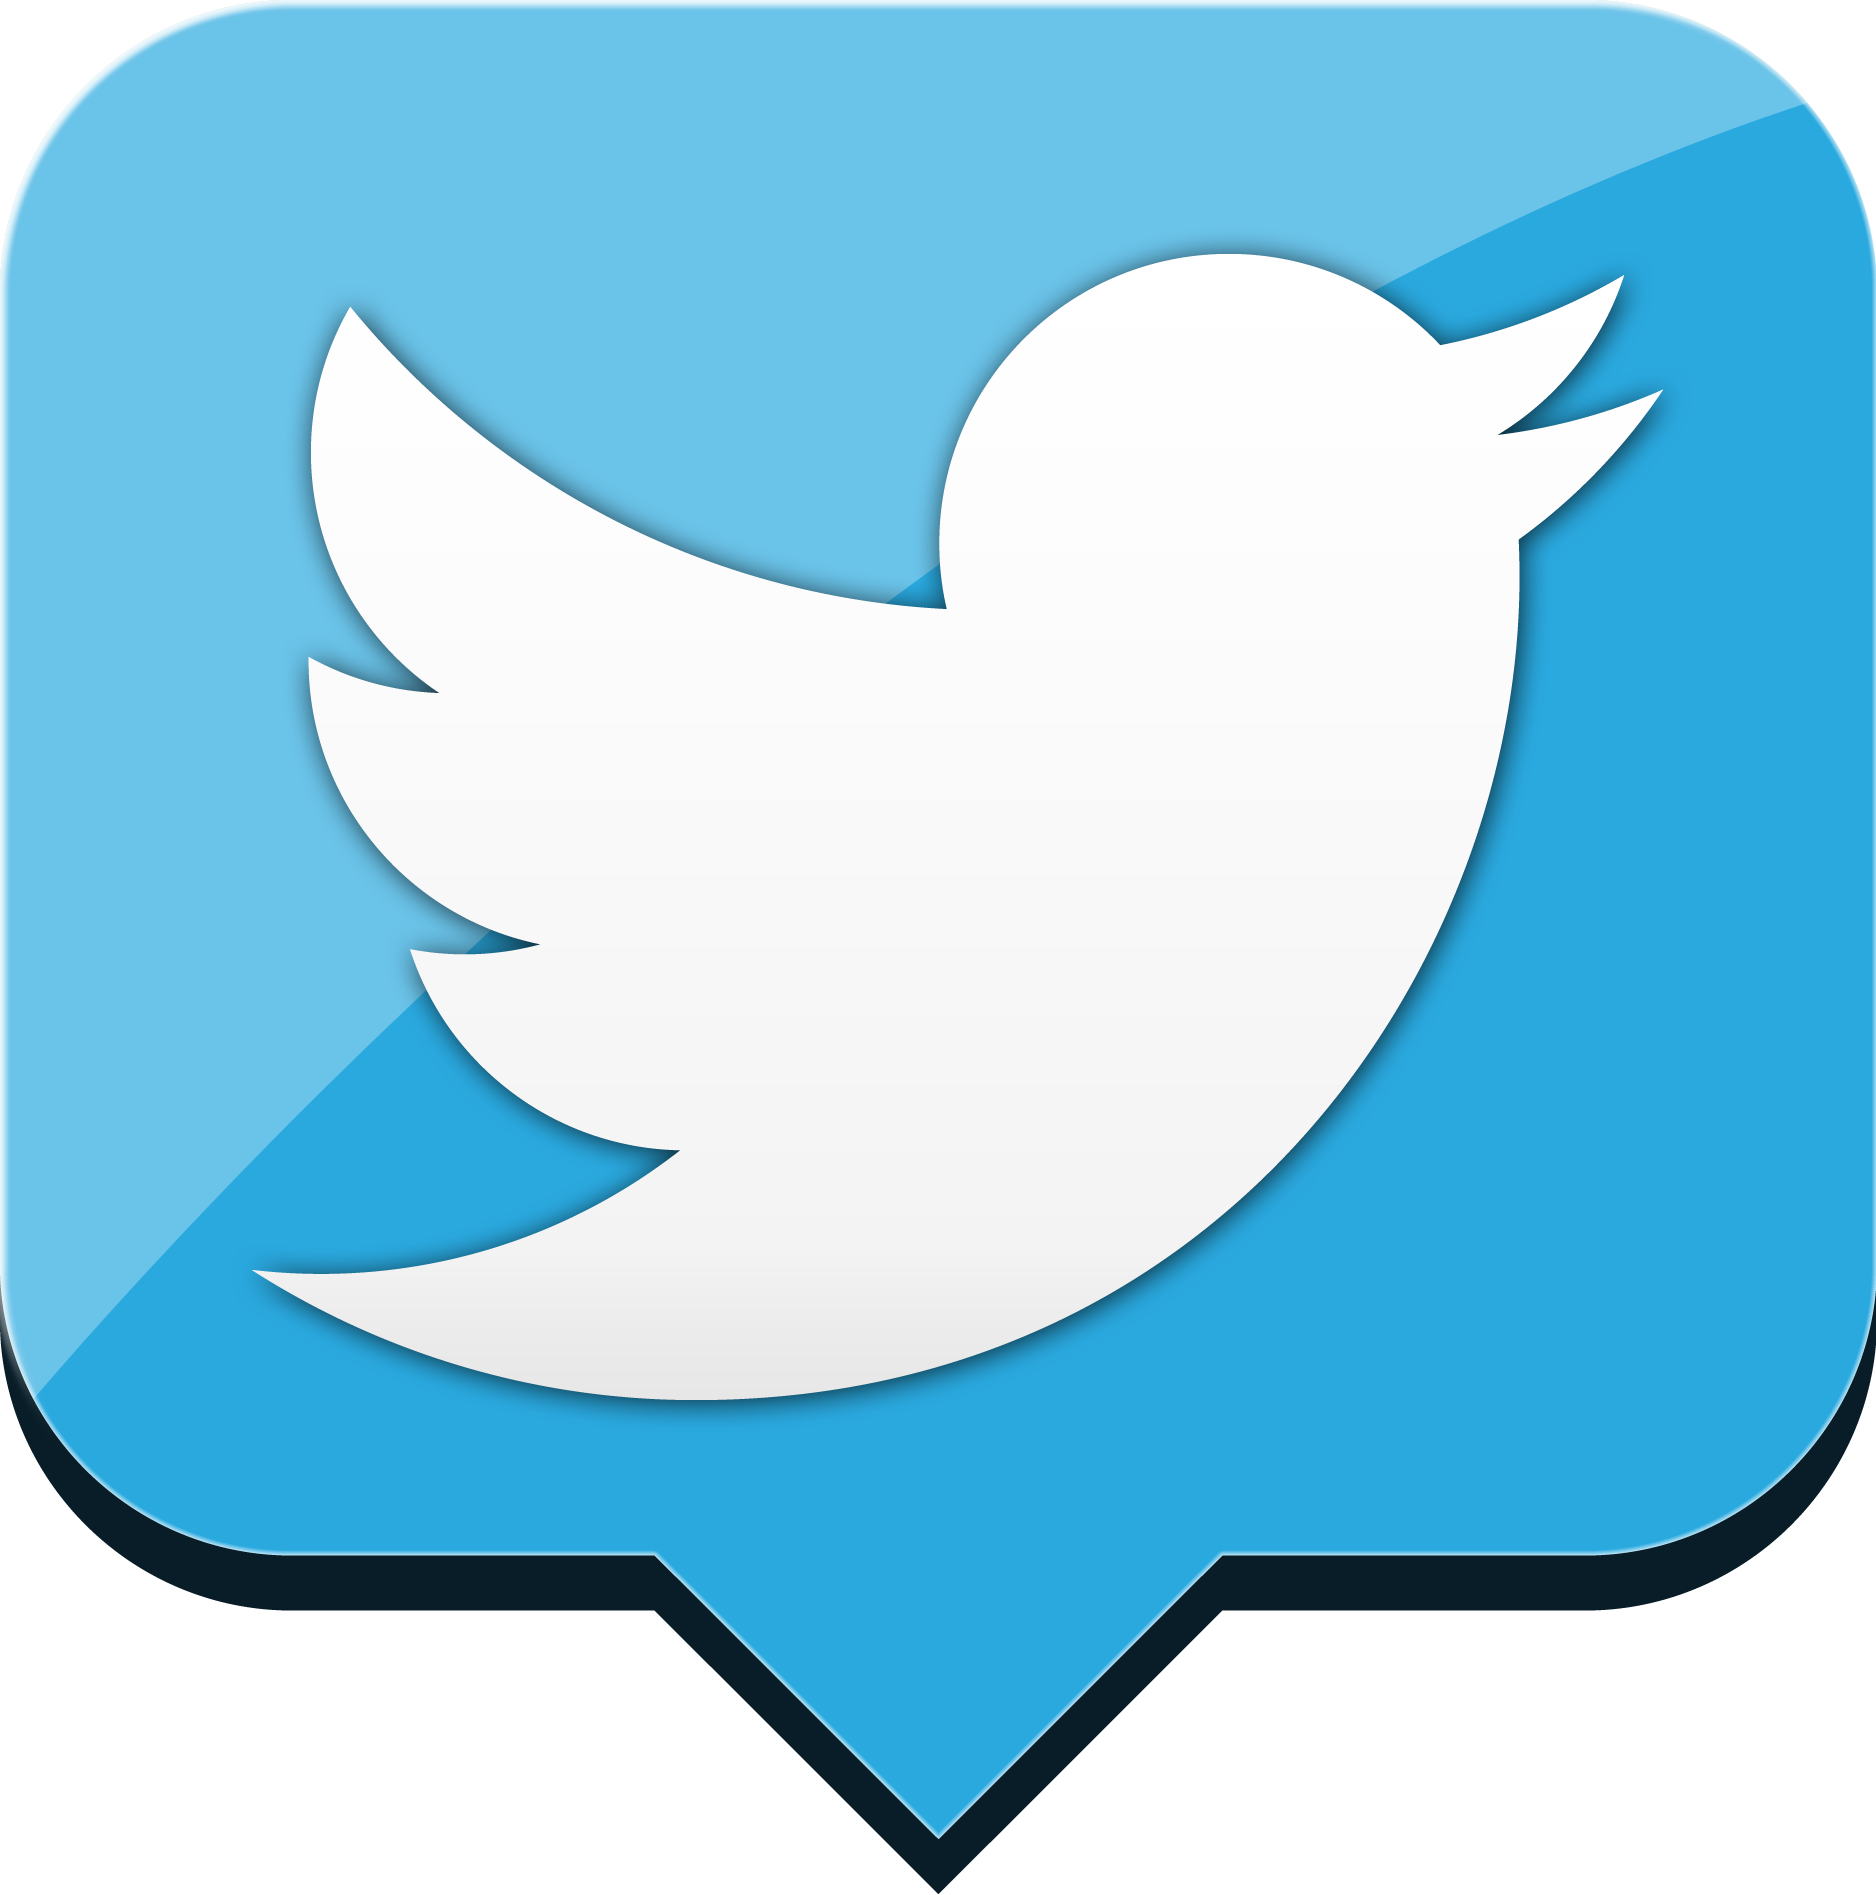 Https twitter com t. Twitter. Значок твиттера. Логотип Твиттер. Твибер.